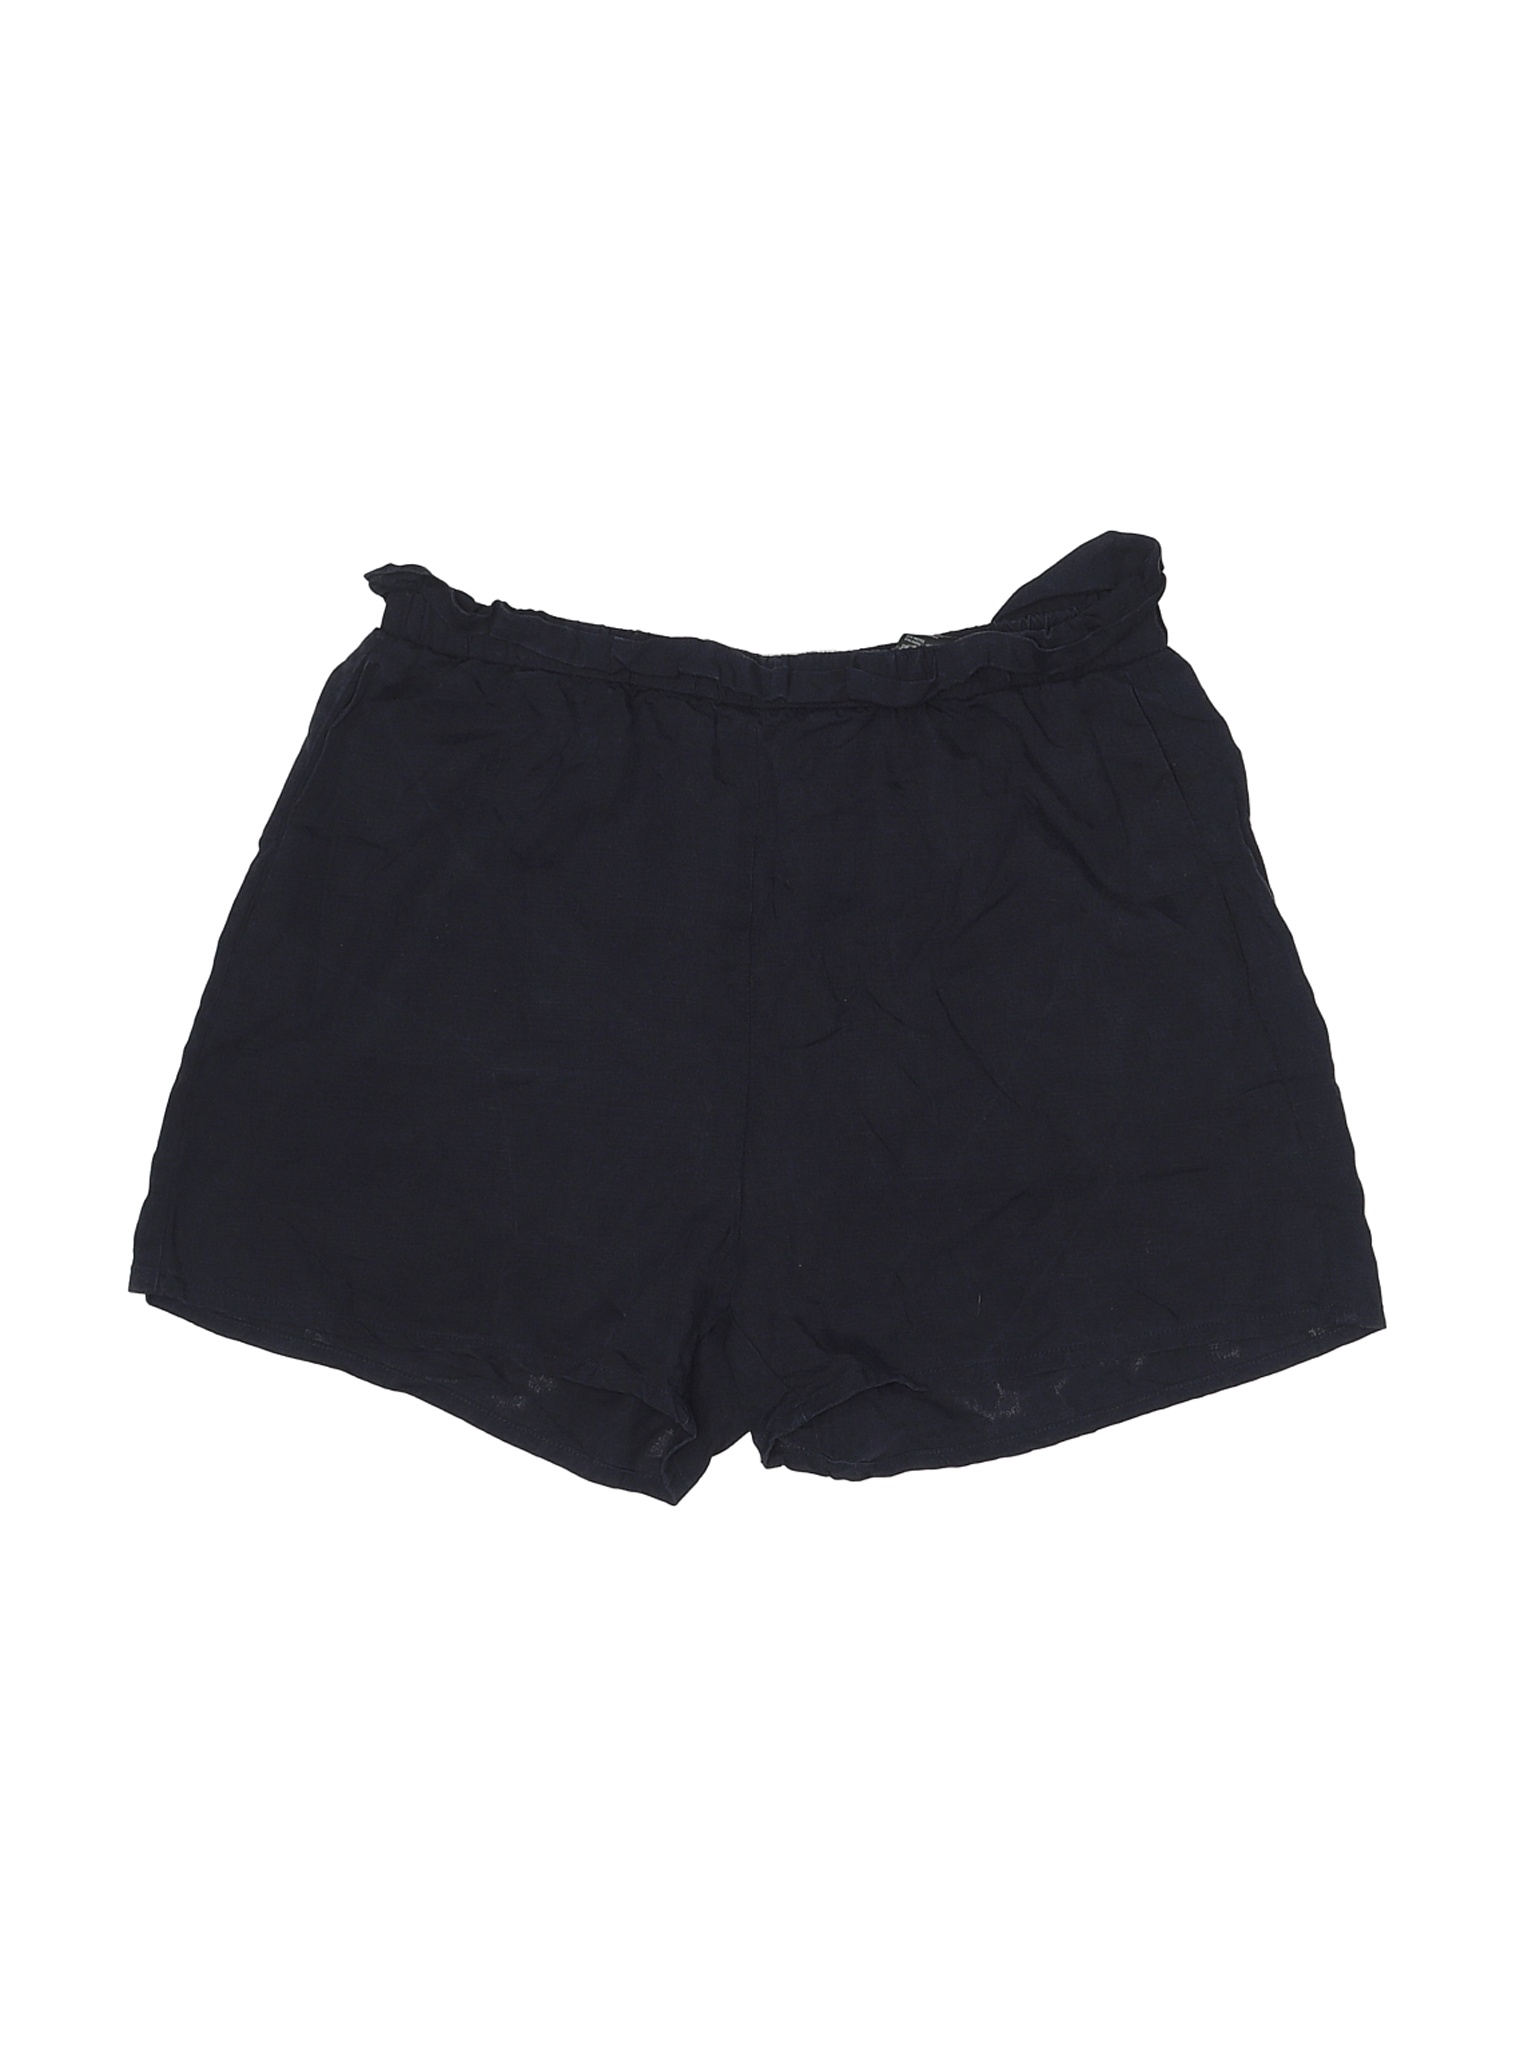 H&M Women Black Shorts 10 | eBay